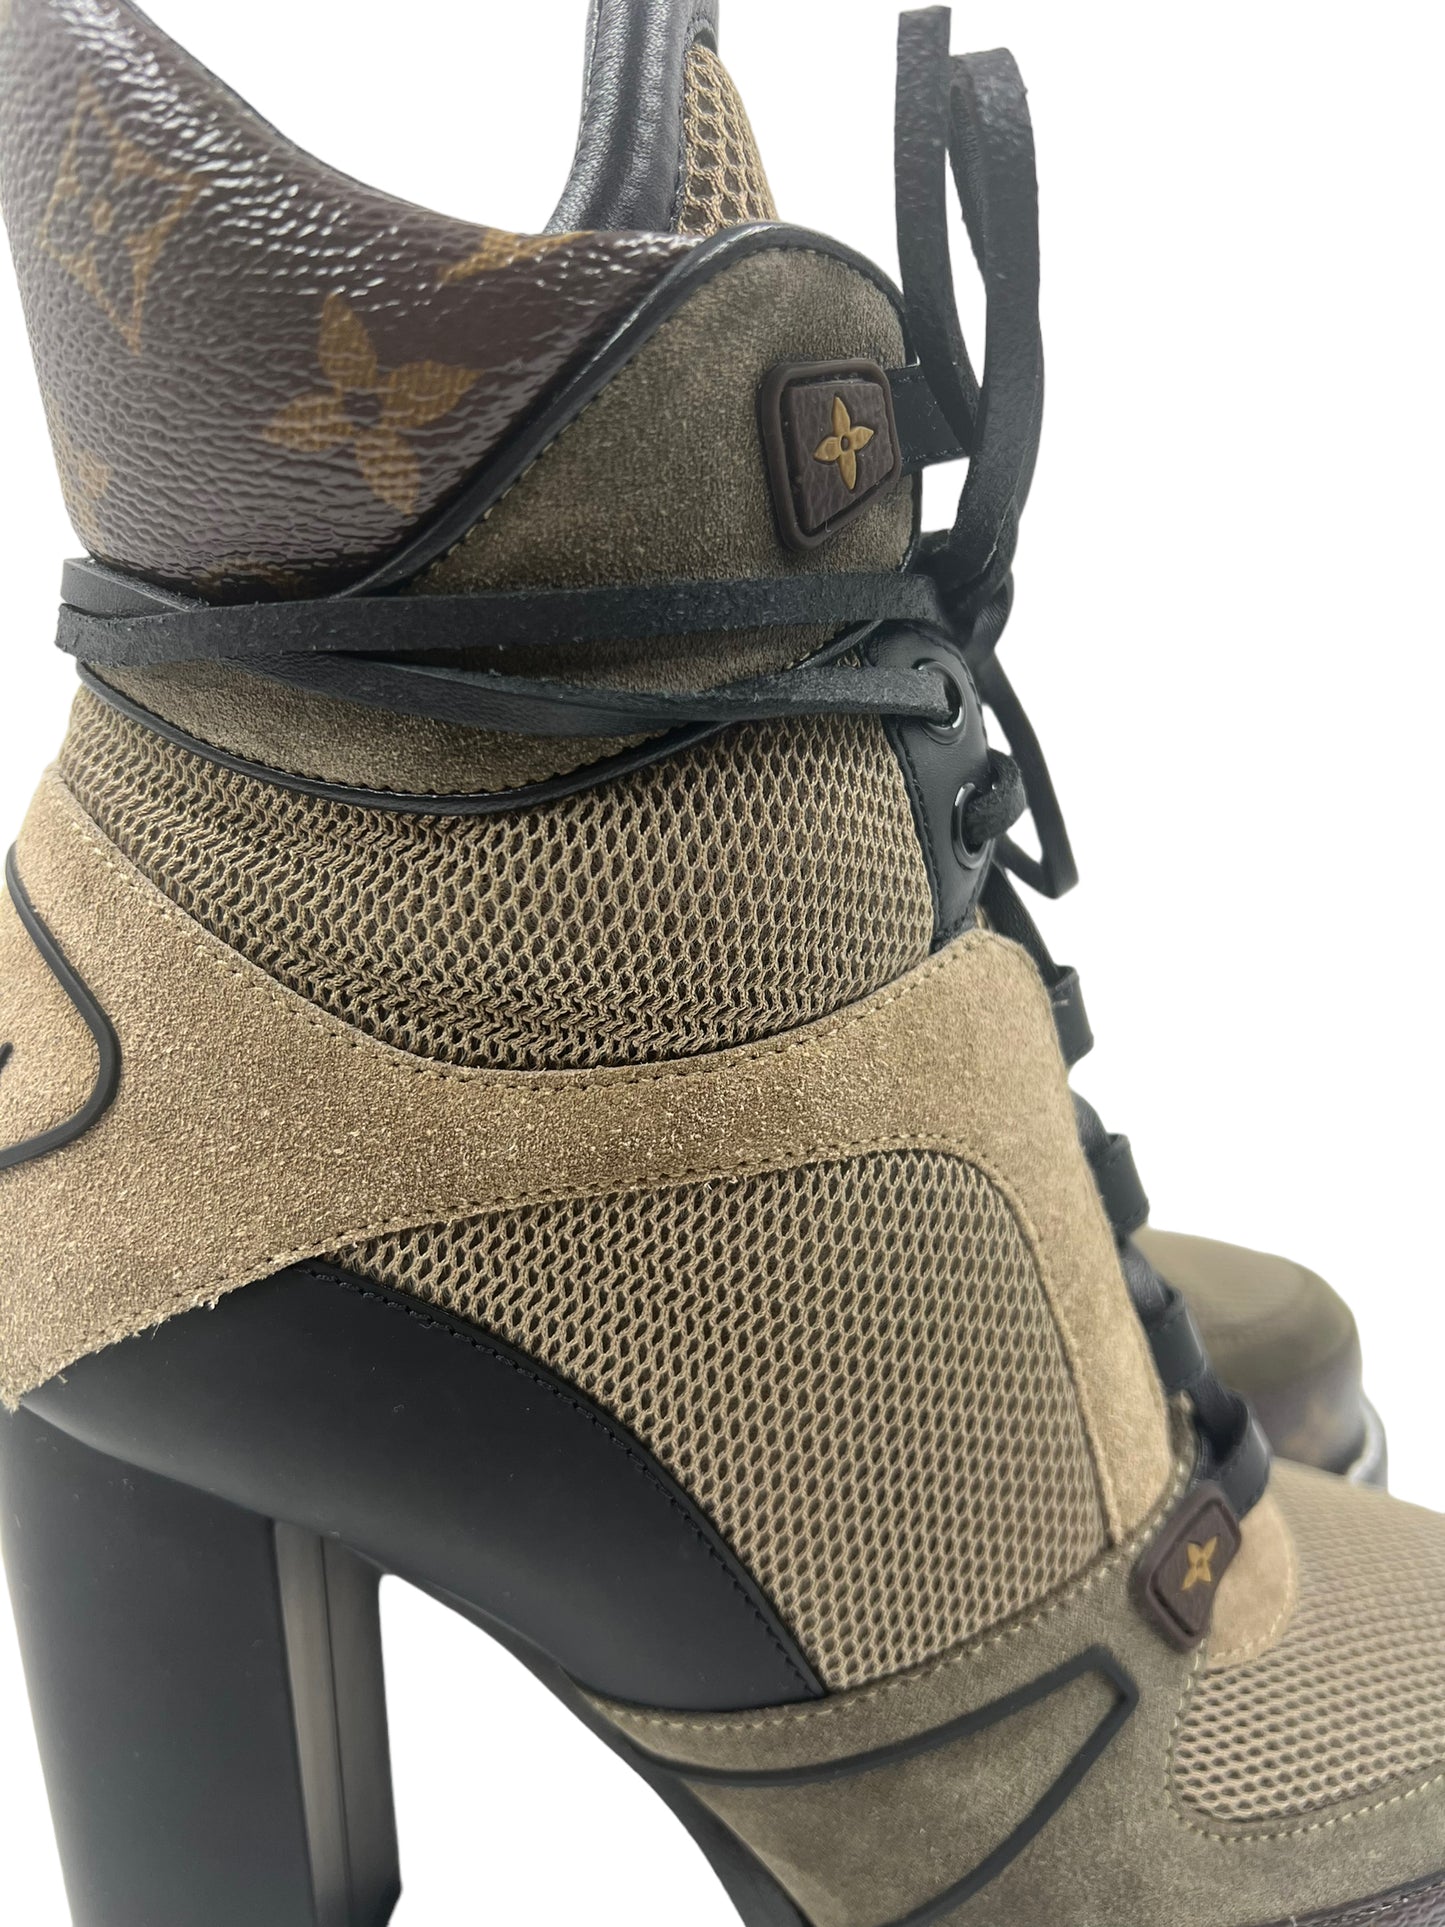 Louis Vuitton Size 40 Suede Calfskin Star Trail Boots